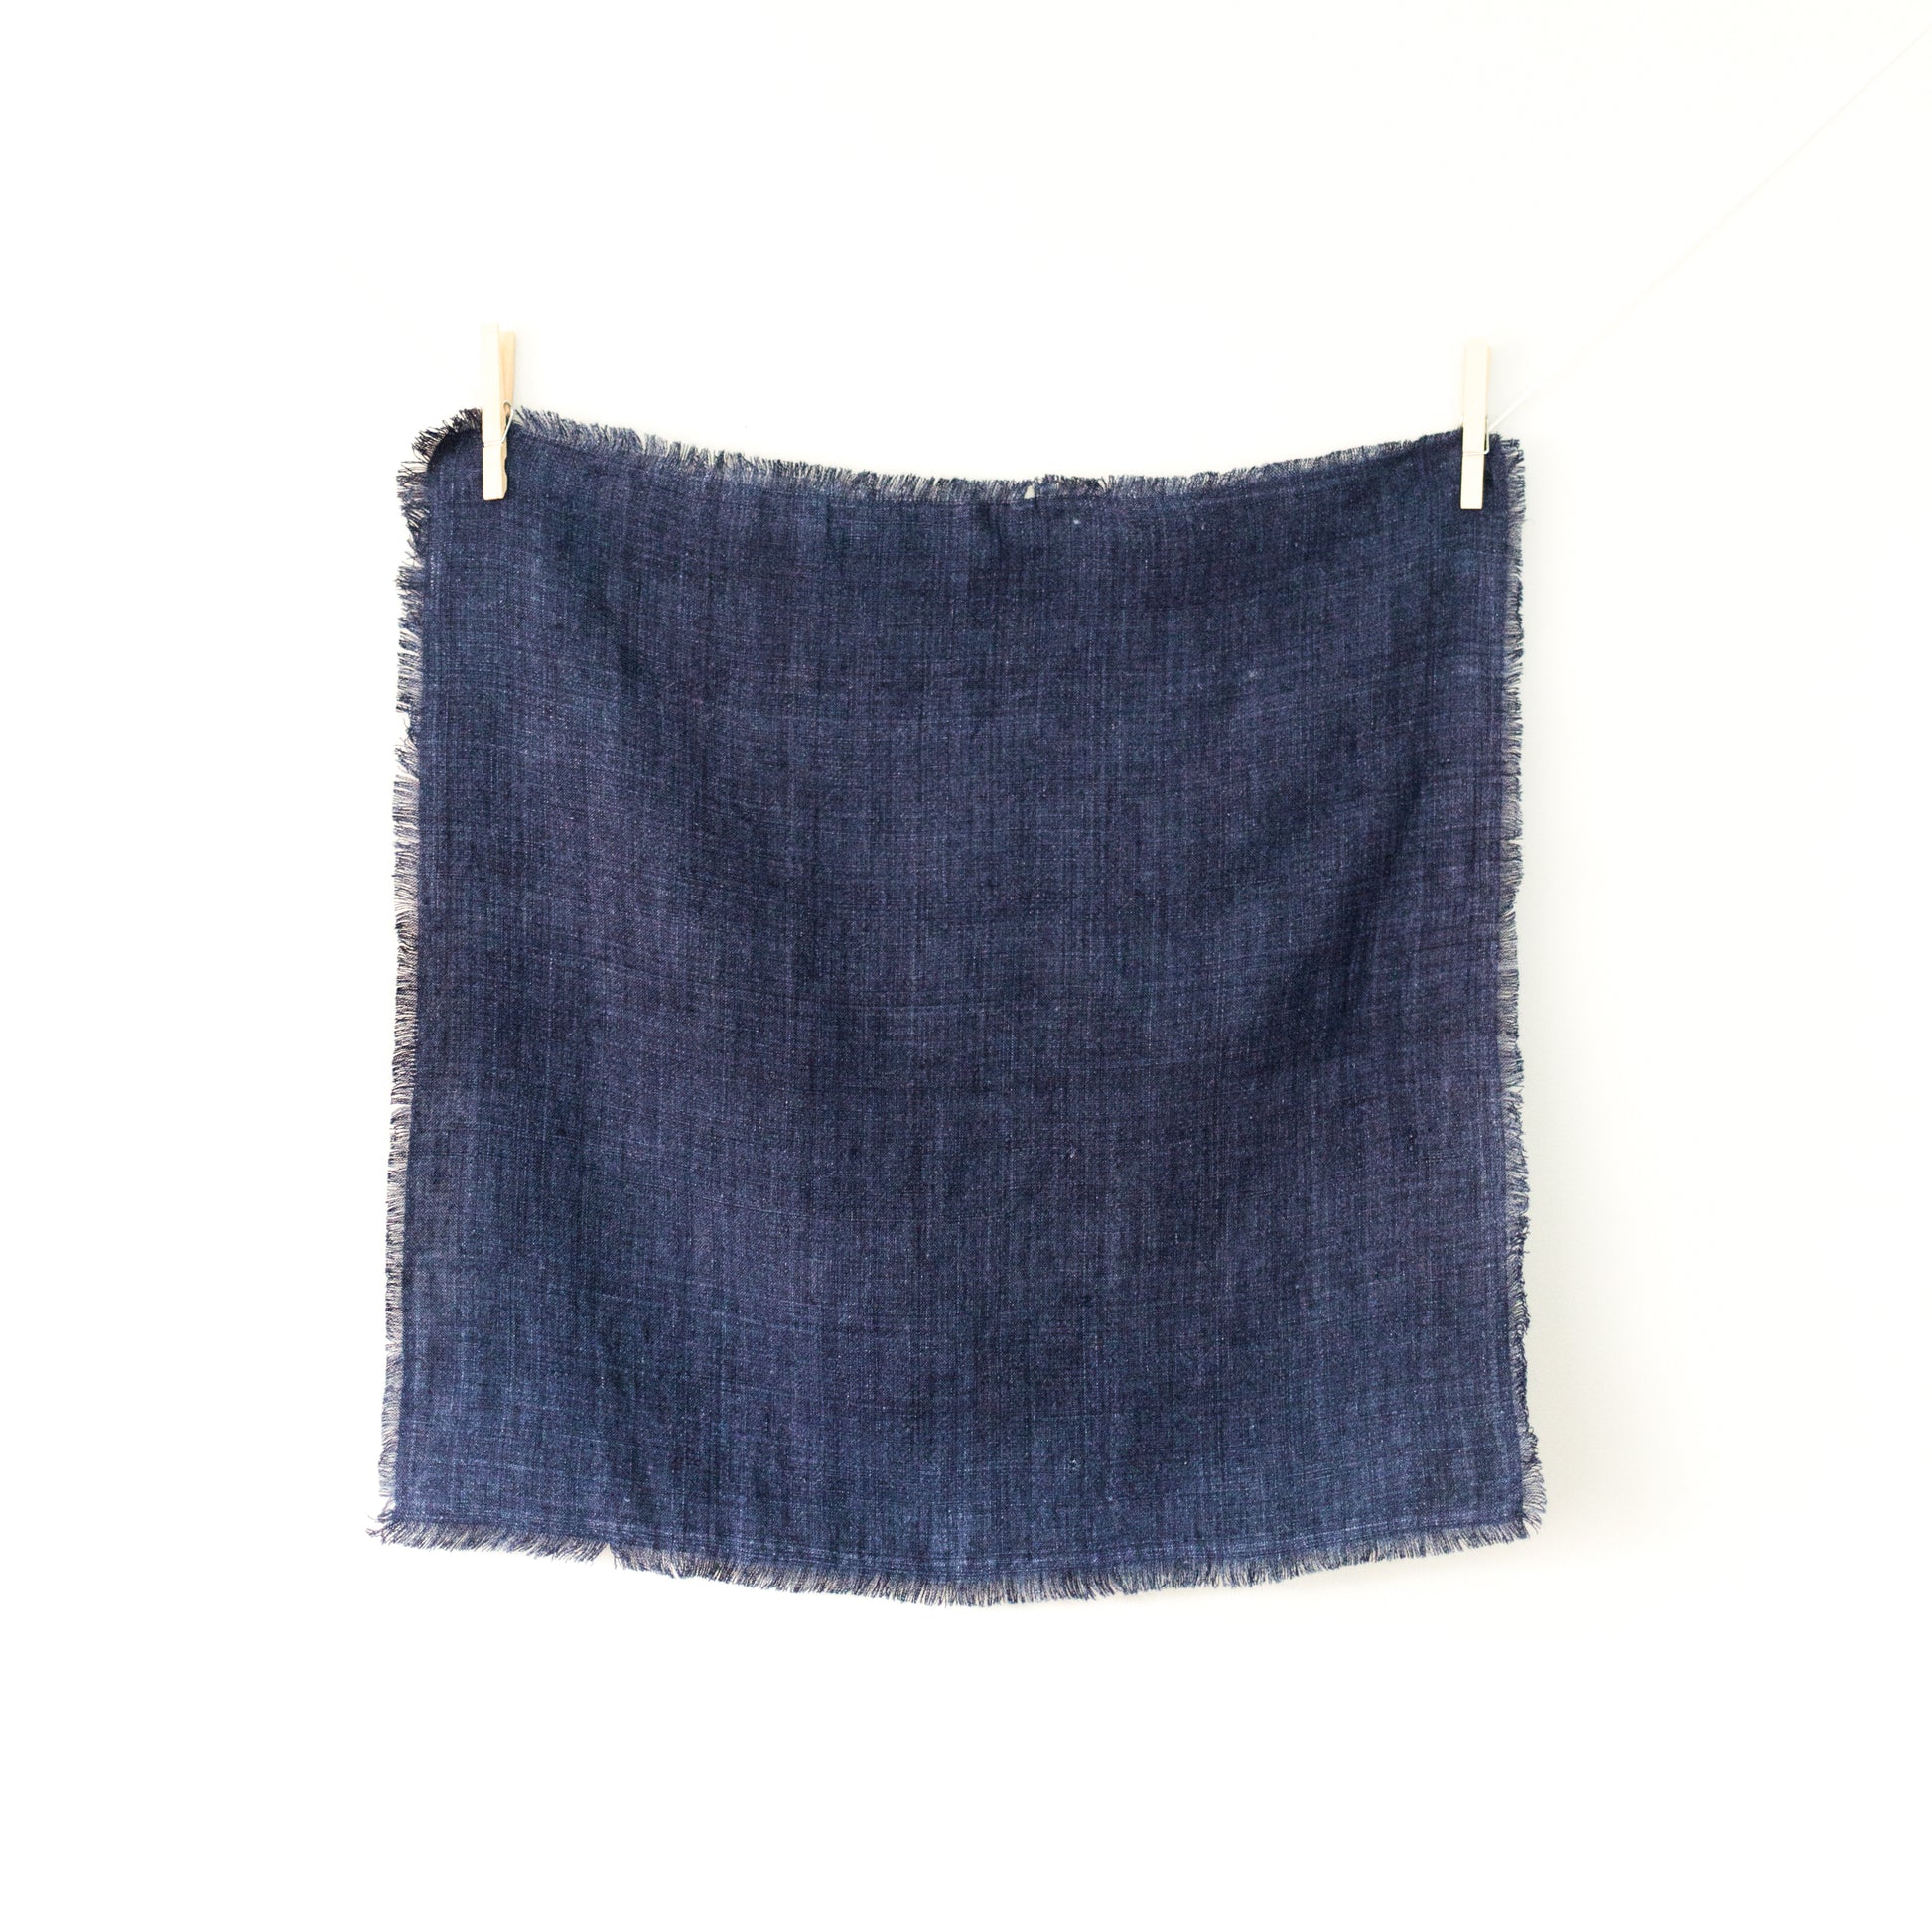 20-inch square stonewashed linen napkins with fringe edge shown hanging on clothesline